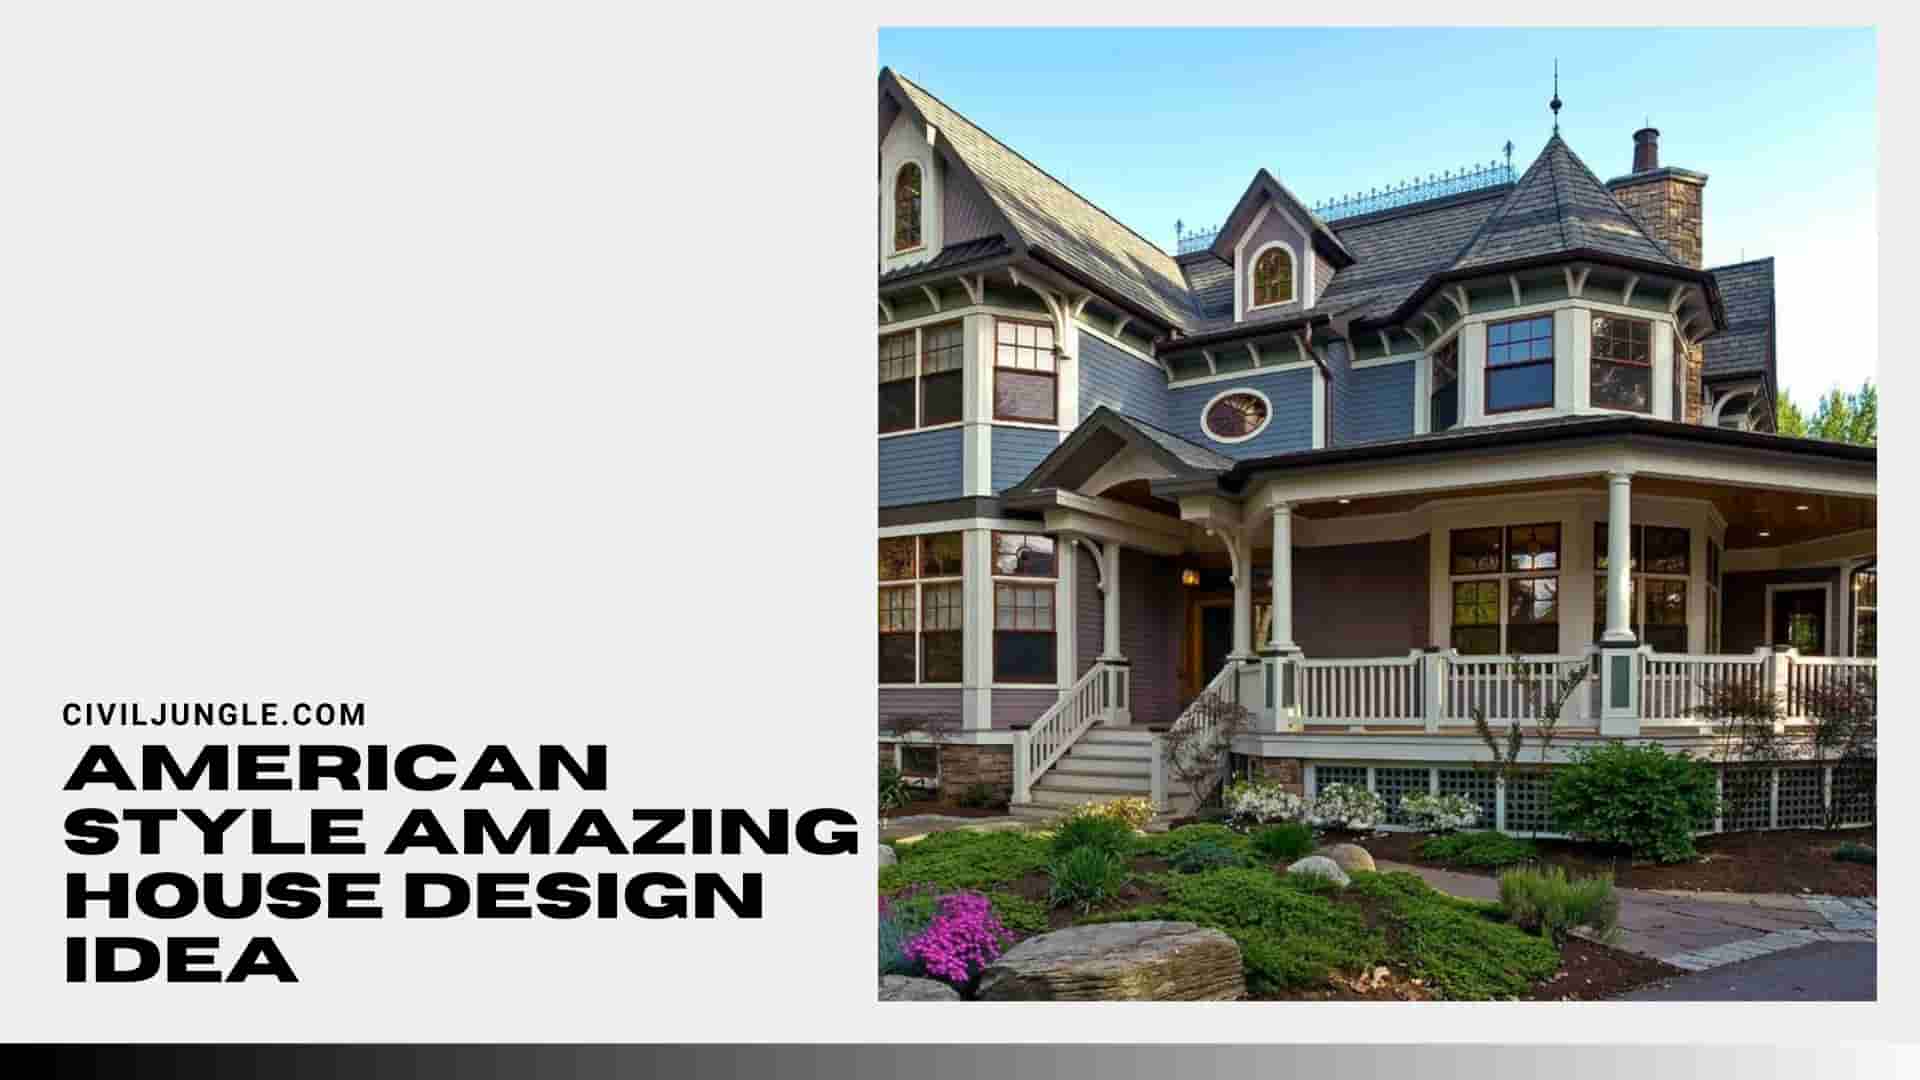 American style Amazing House Design Idea